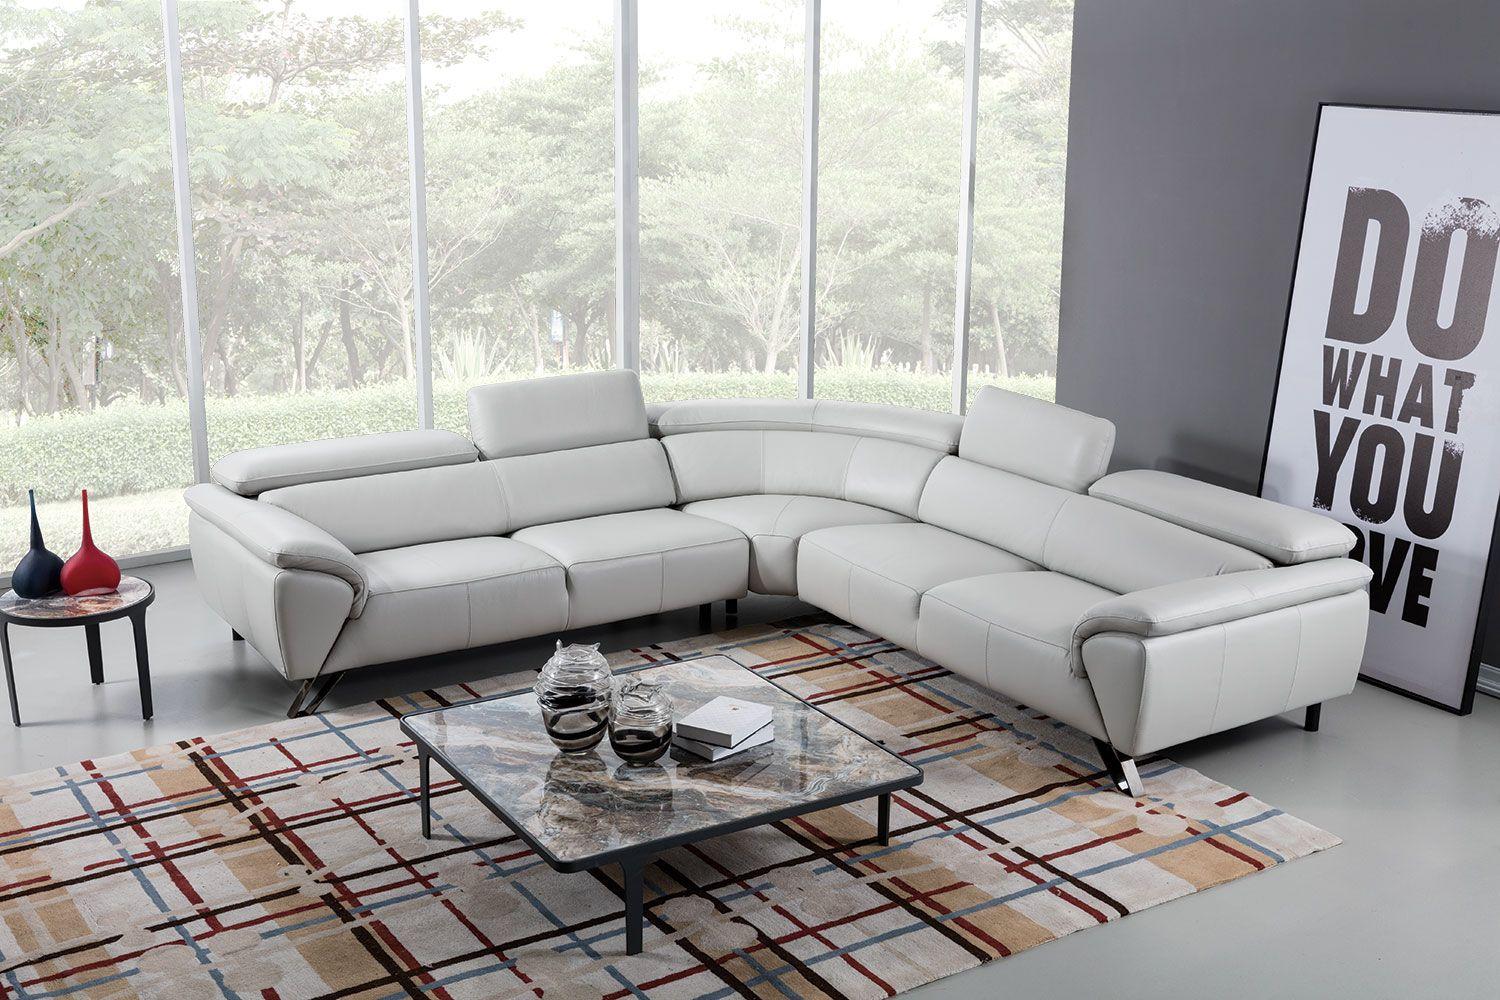 Contemporary, Modern Sectional Sofa EK-L8002M-LG EK-L8002M-LG in Light Gray Top grain leather